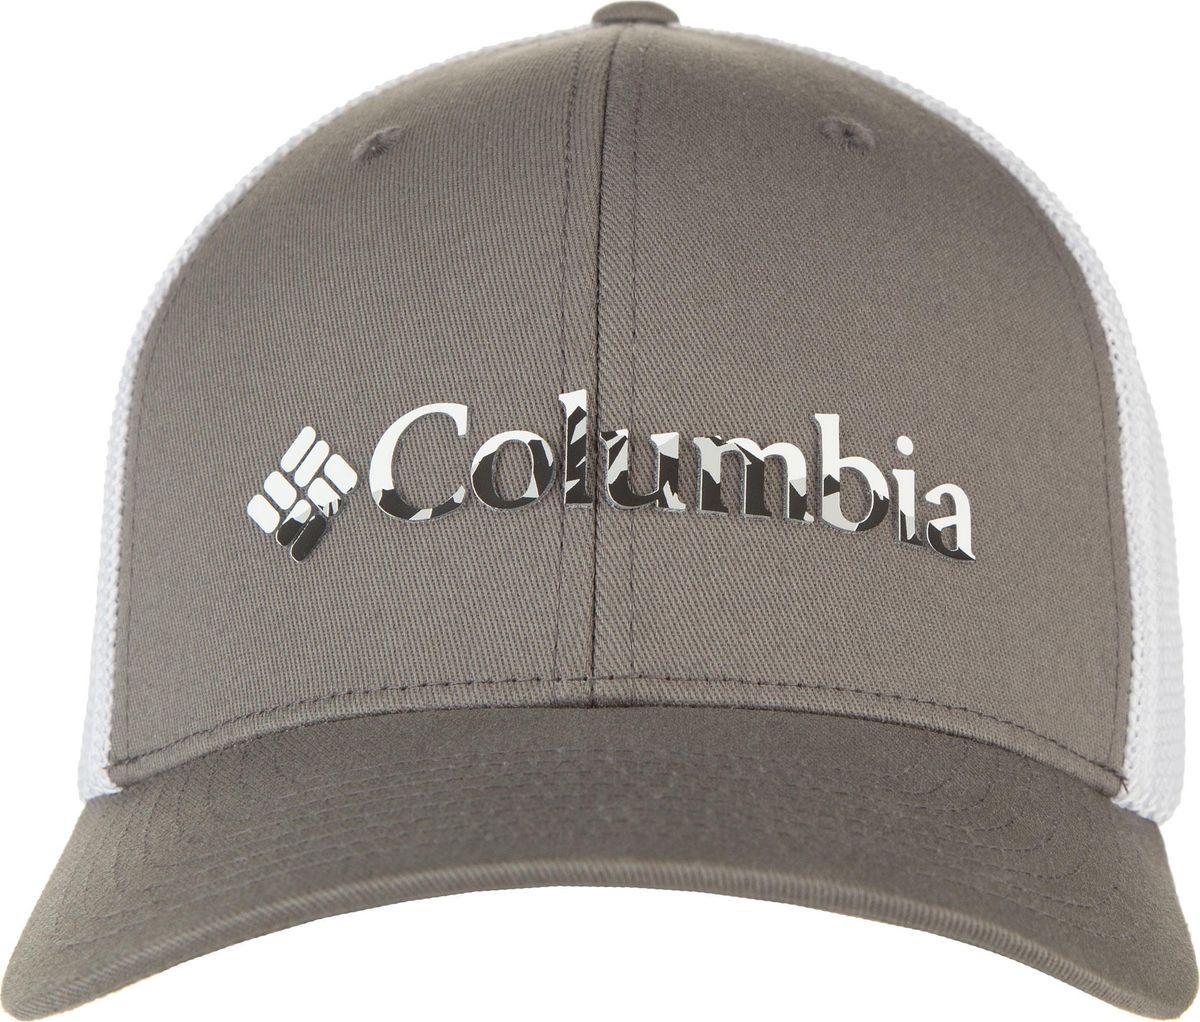  Columbia Mesh Ballcap, : . 1495921-049.  S/M (56/57)